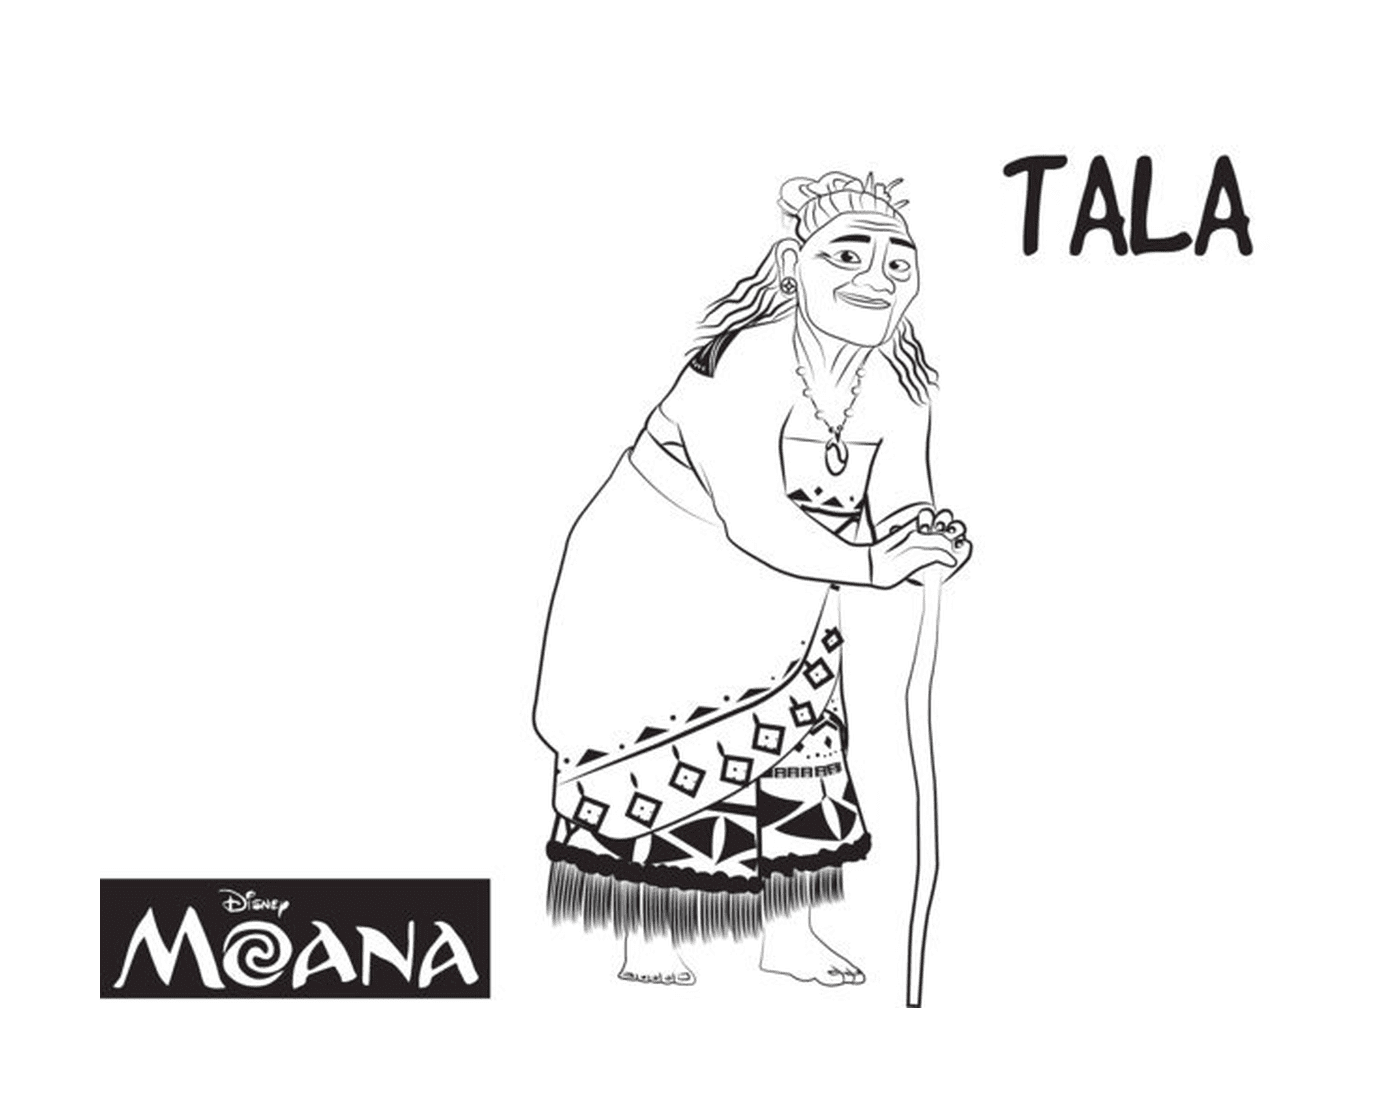  Tala, spiritueller Hüter von Moana 